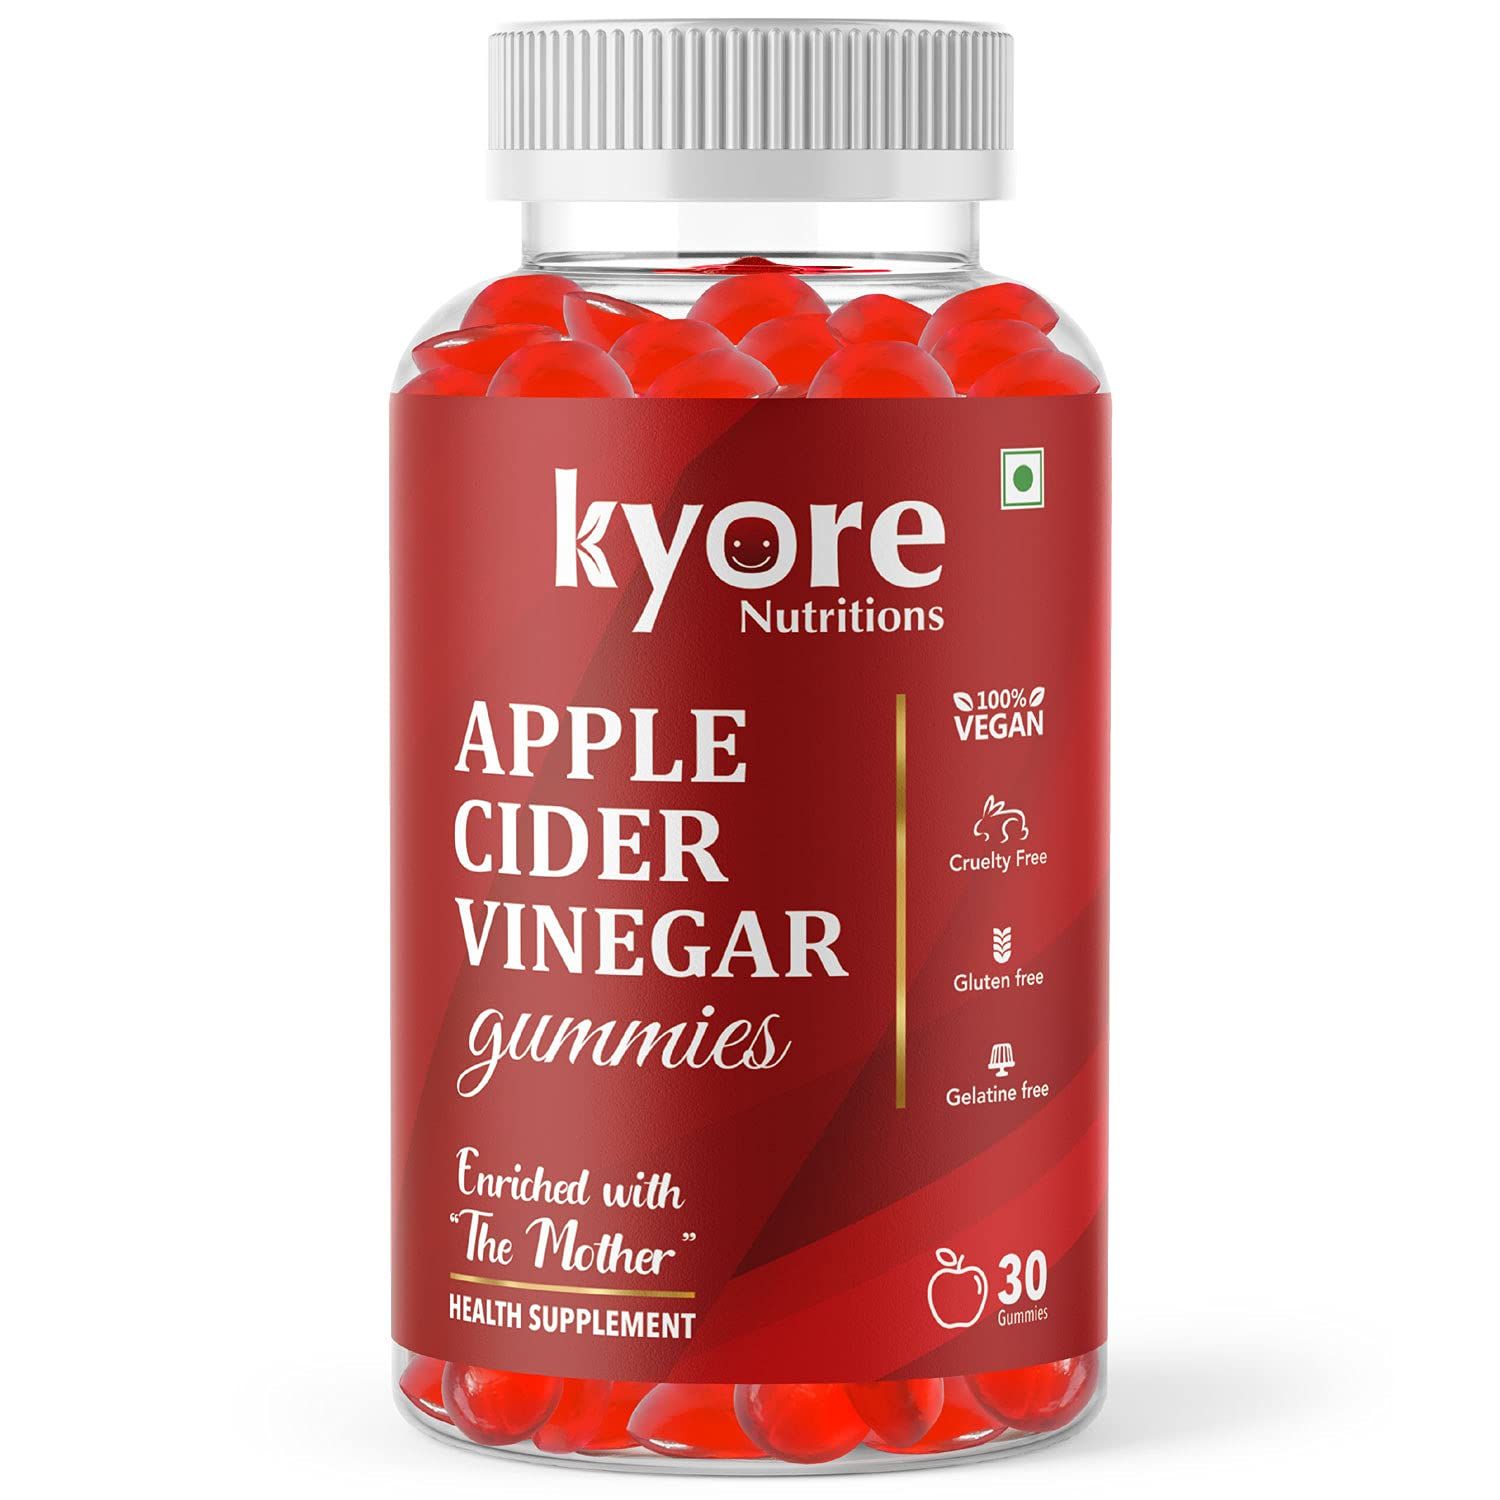 Kyore Apple Cider Vinegar Gummies Image